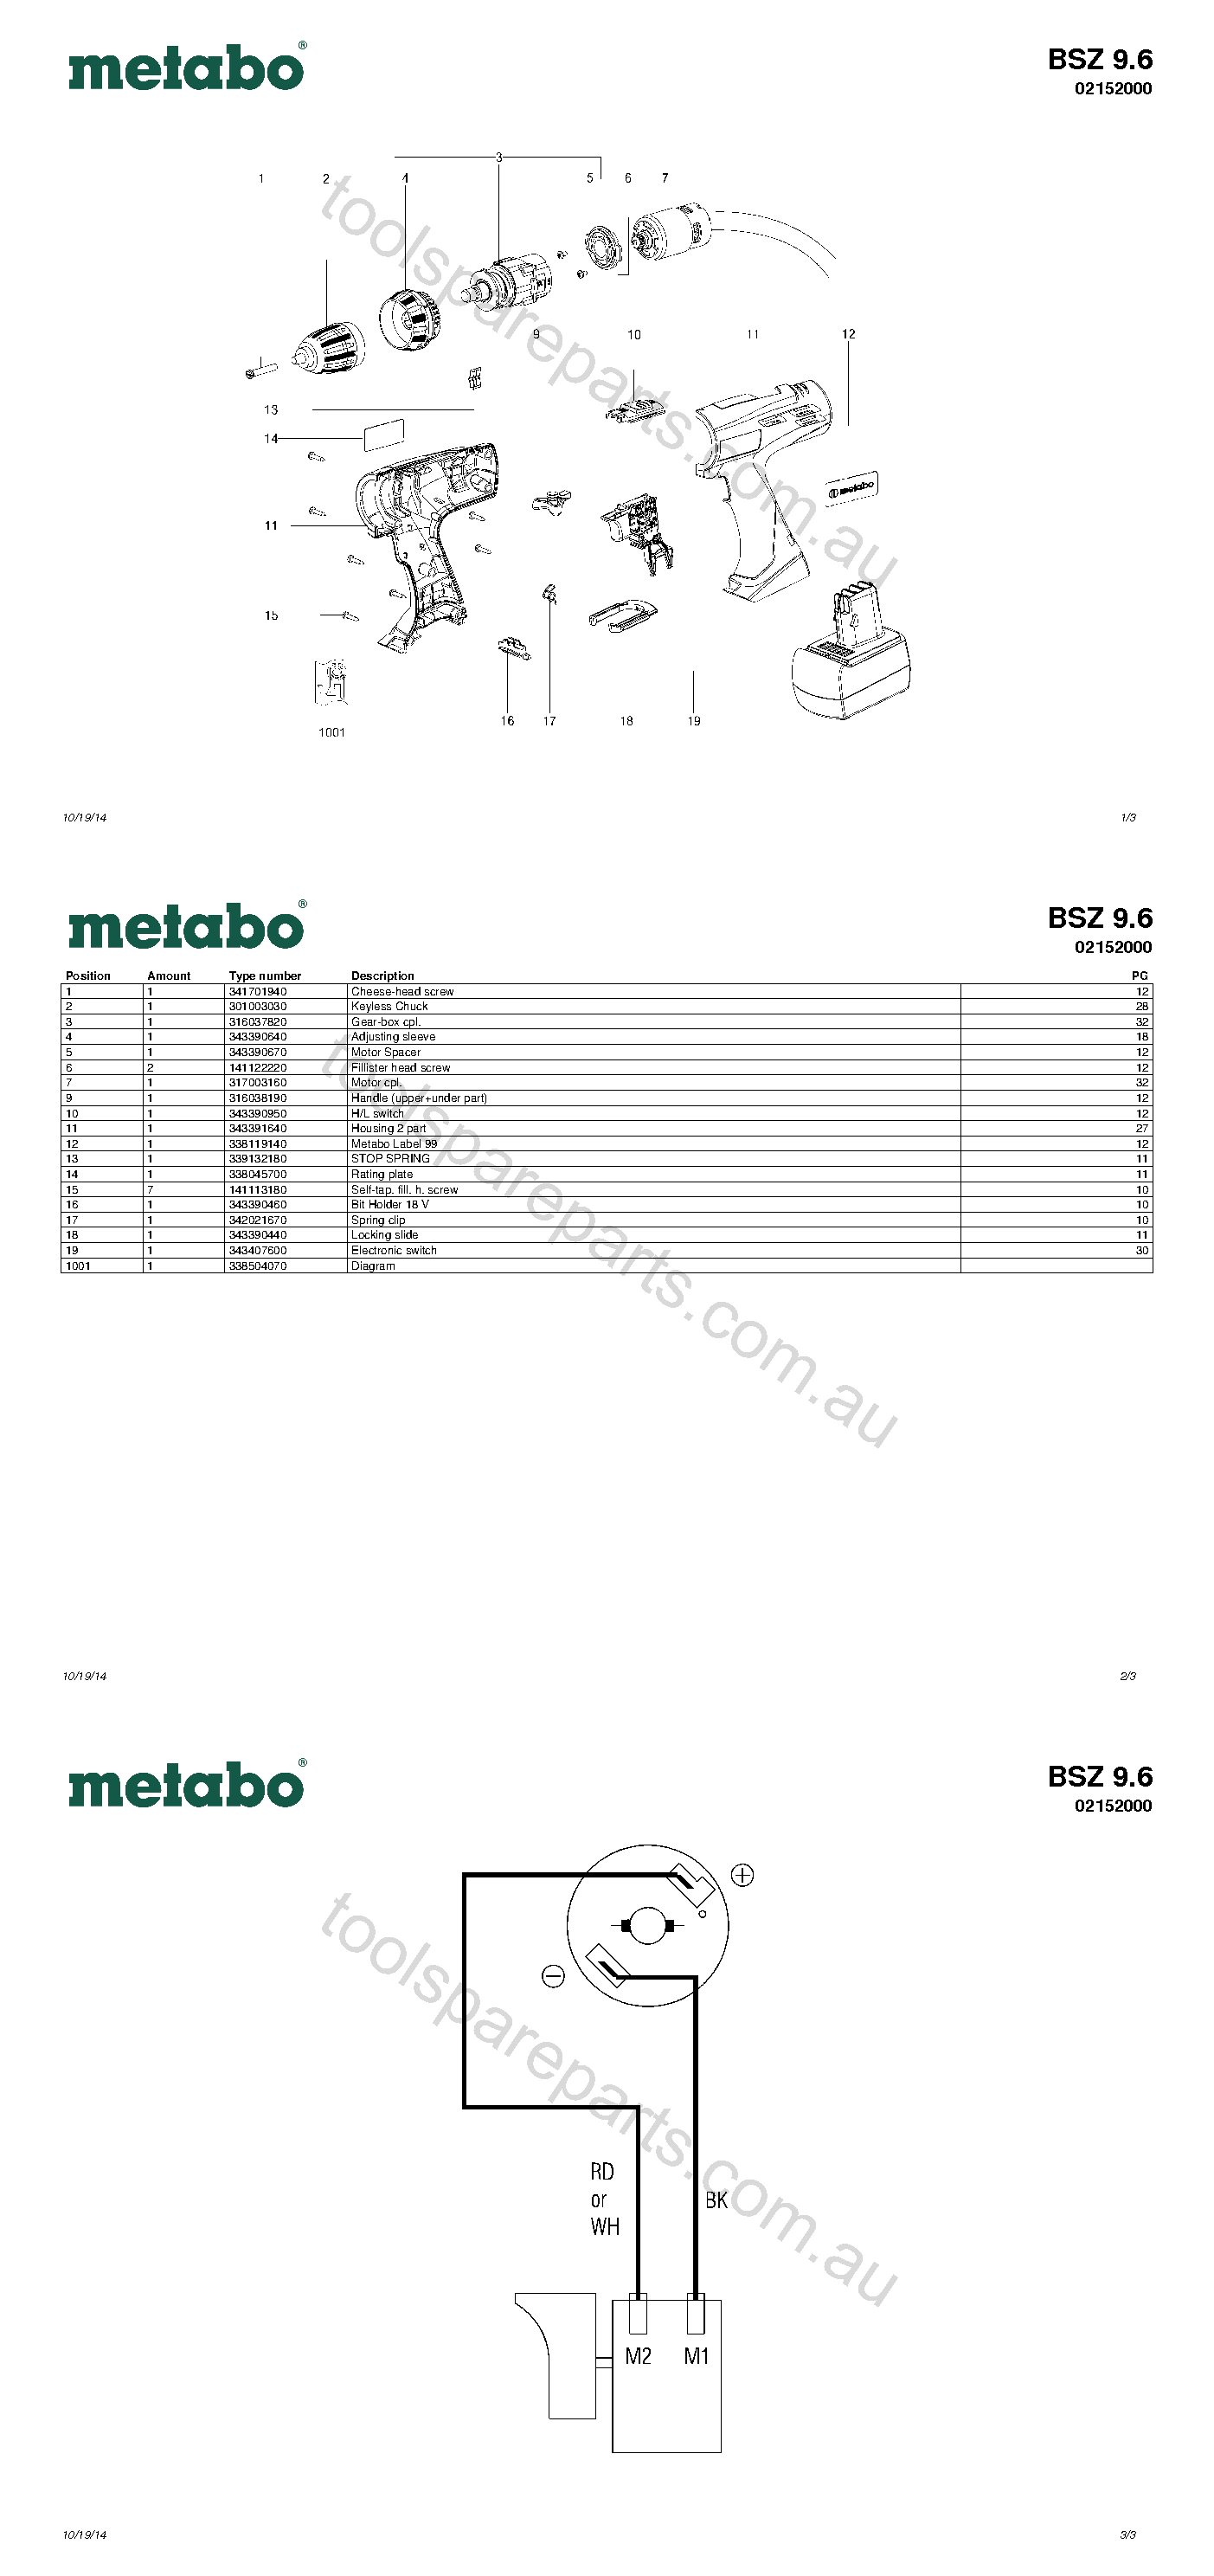 Metabo BSZ 9.6 02152000  Diagram 1